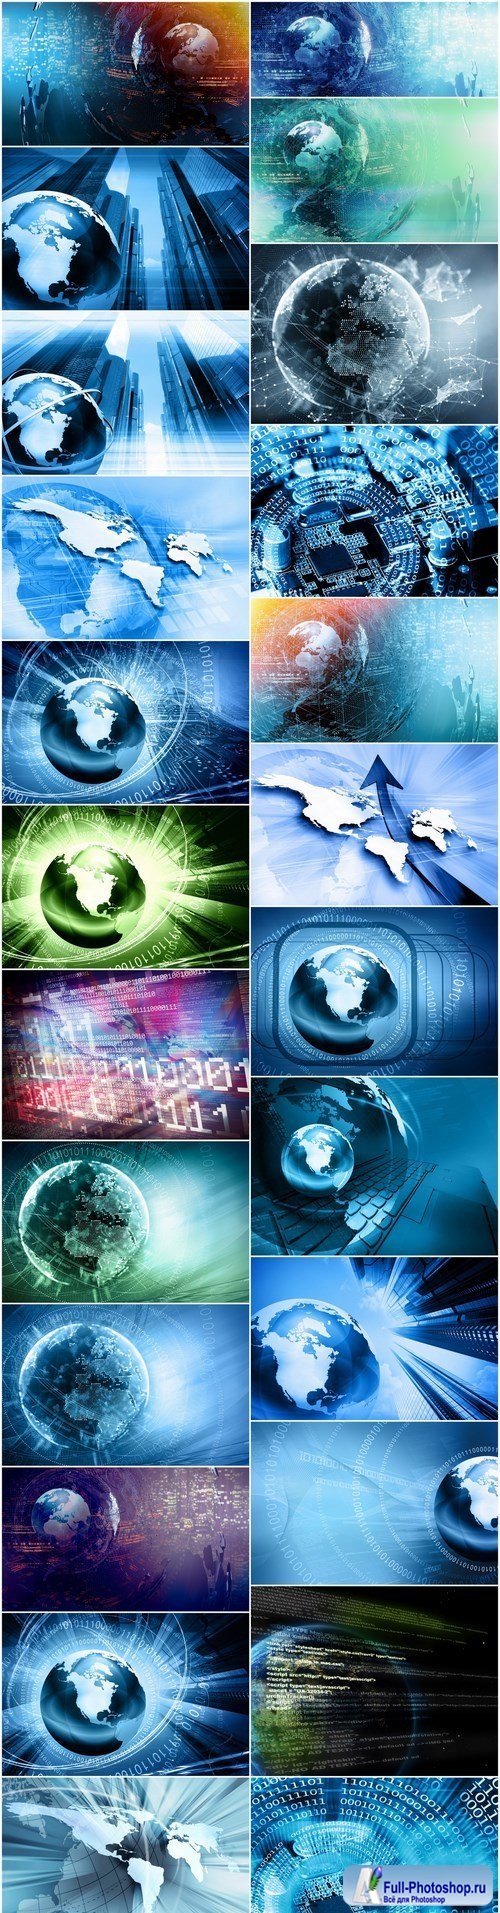 Digital world - Set of 24xUHQ JPEG Professional Stock Images